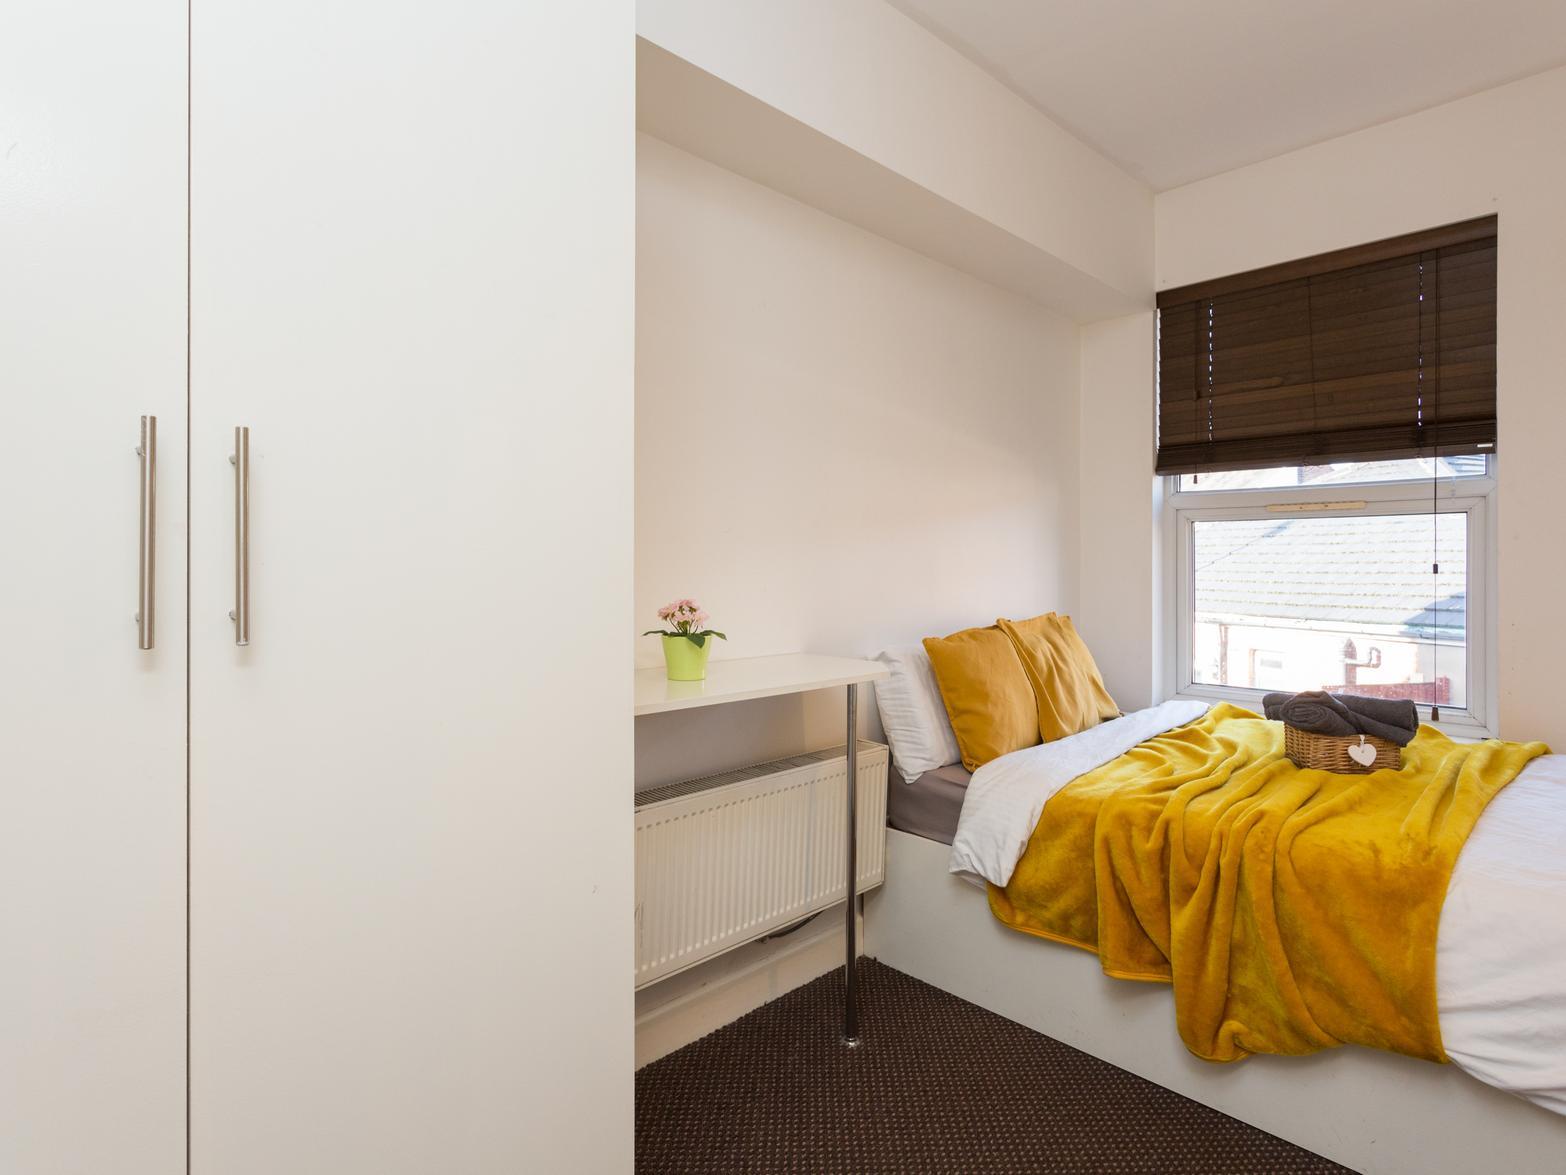 5 bed flat to rent - 7, Preston PR2